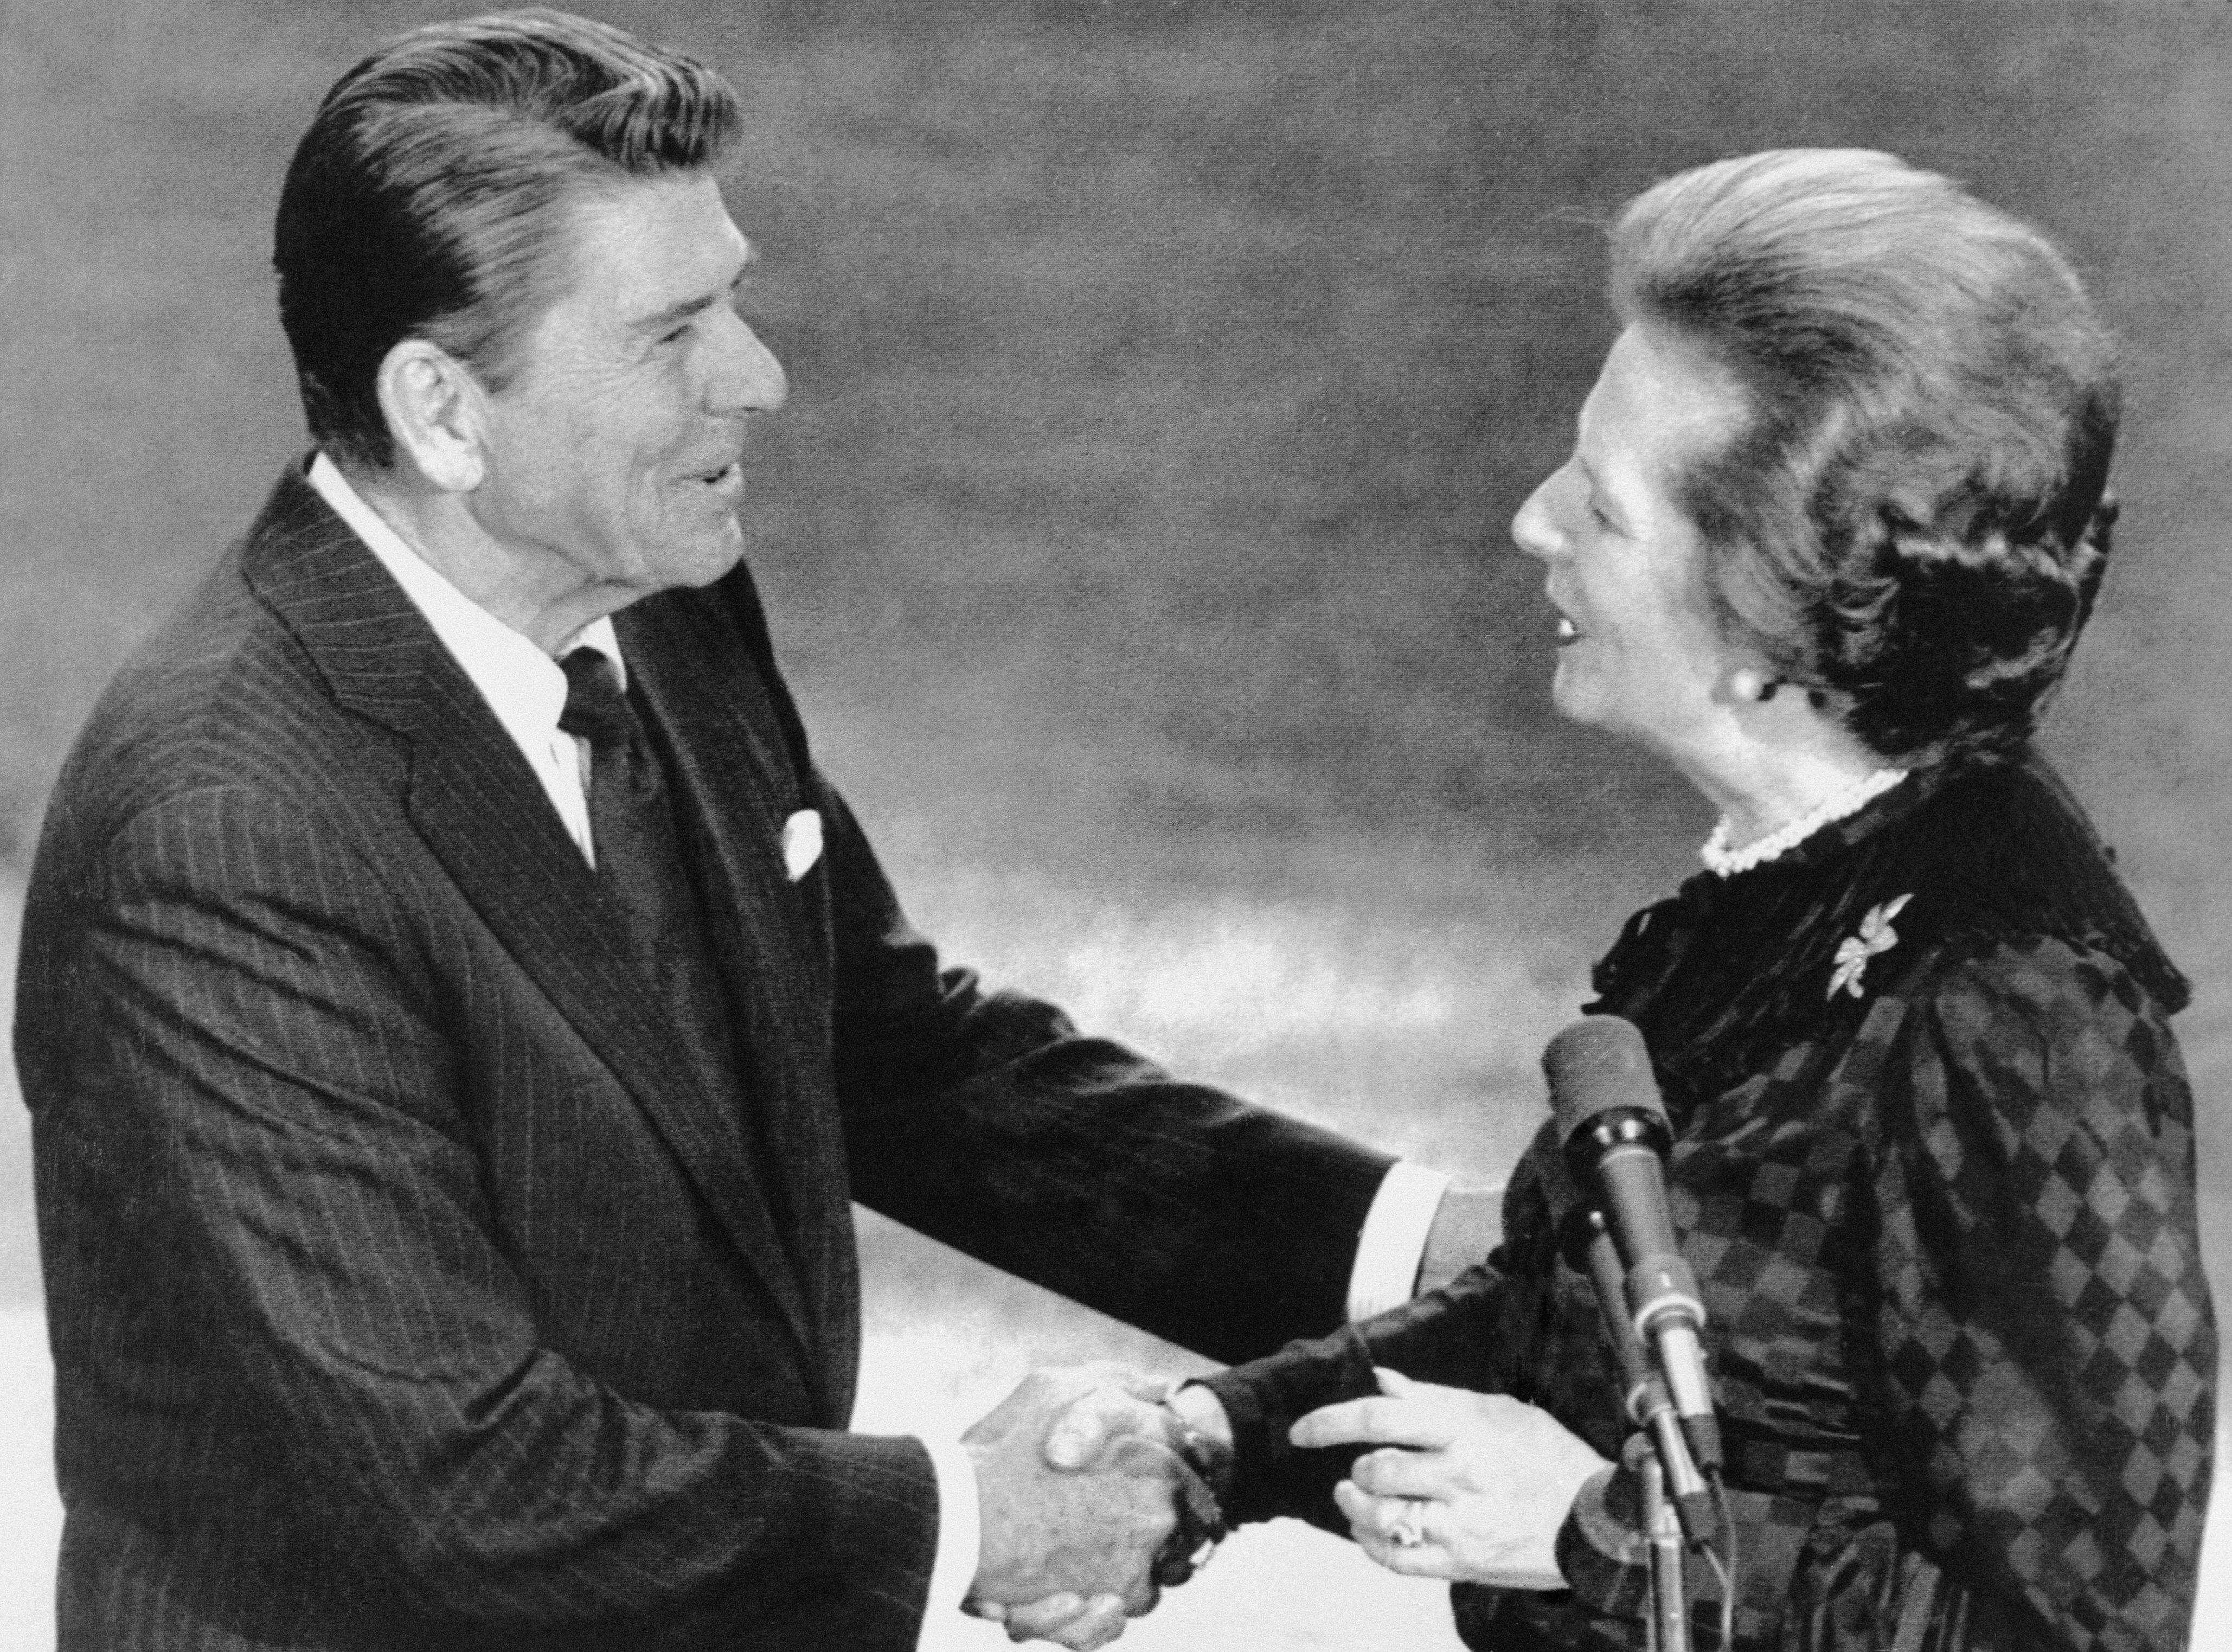 Malvinas - Ronald Reagan Shaking Hands with Margaret Thatcher